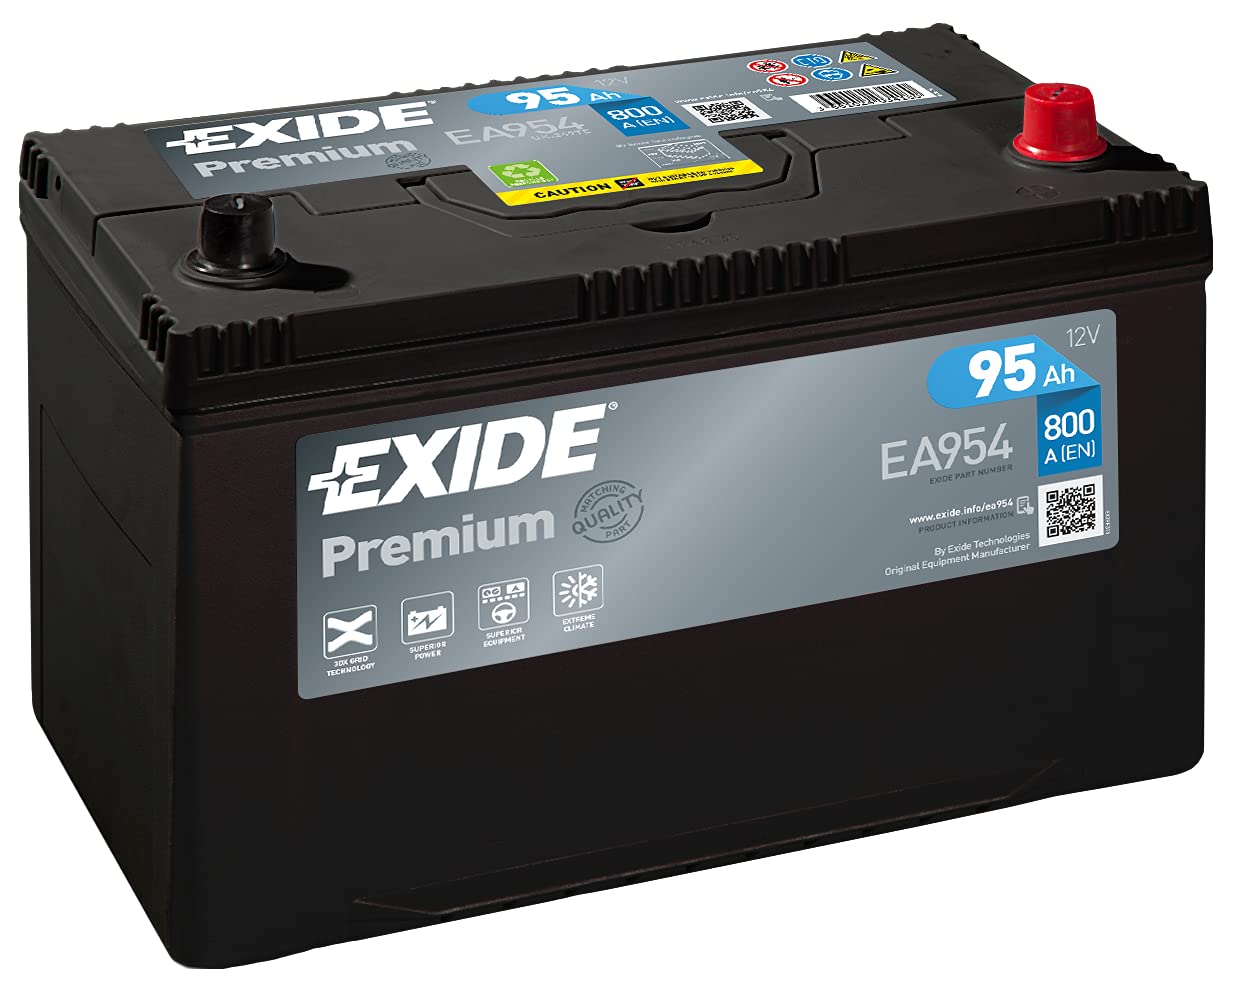 Exide Premium EA954 95Ah Autobatterie von Exide